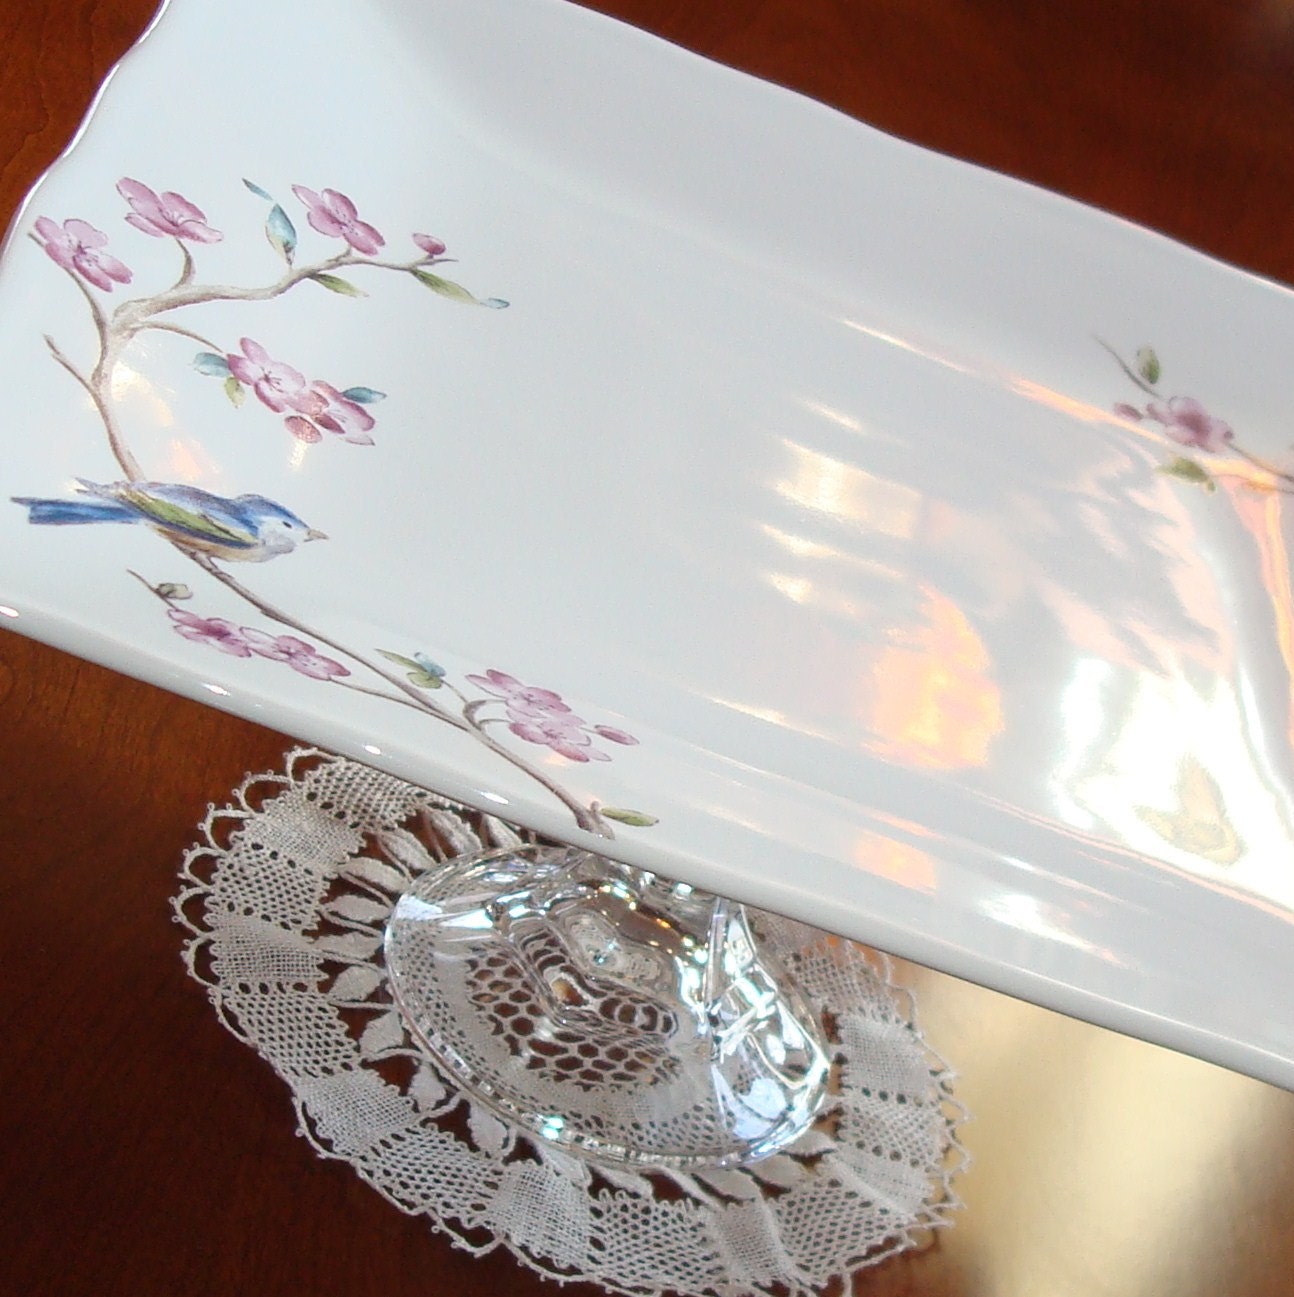 Bluebird and Blossoms Dessert Plate Pedestal No. 060 (11 x 5 inches) - makingtimetc